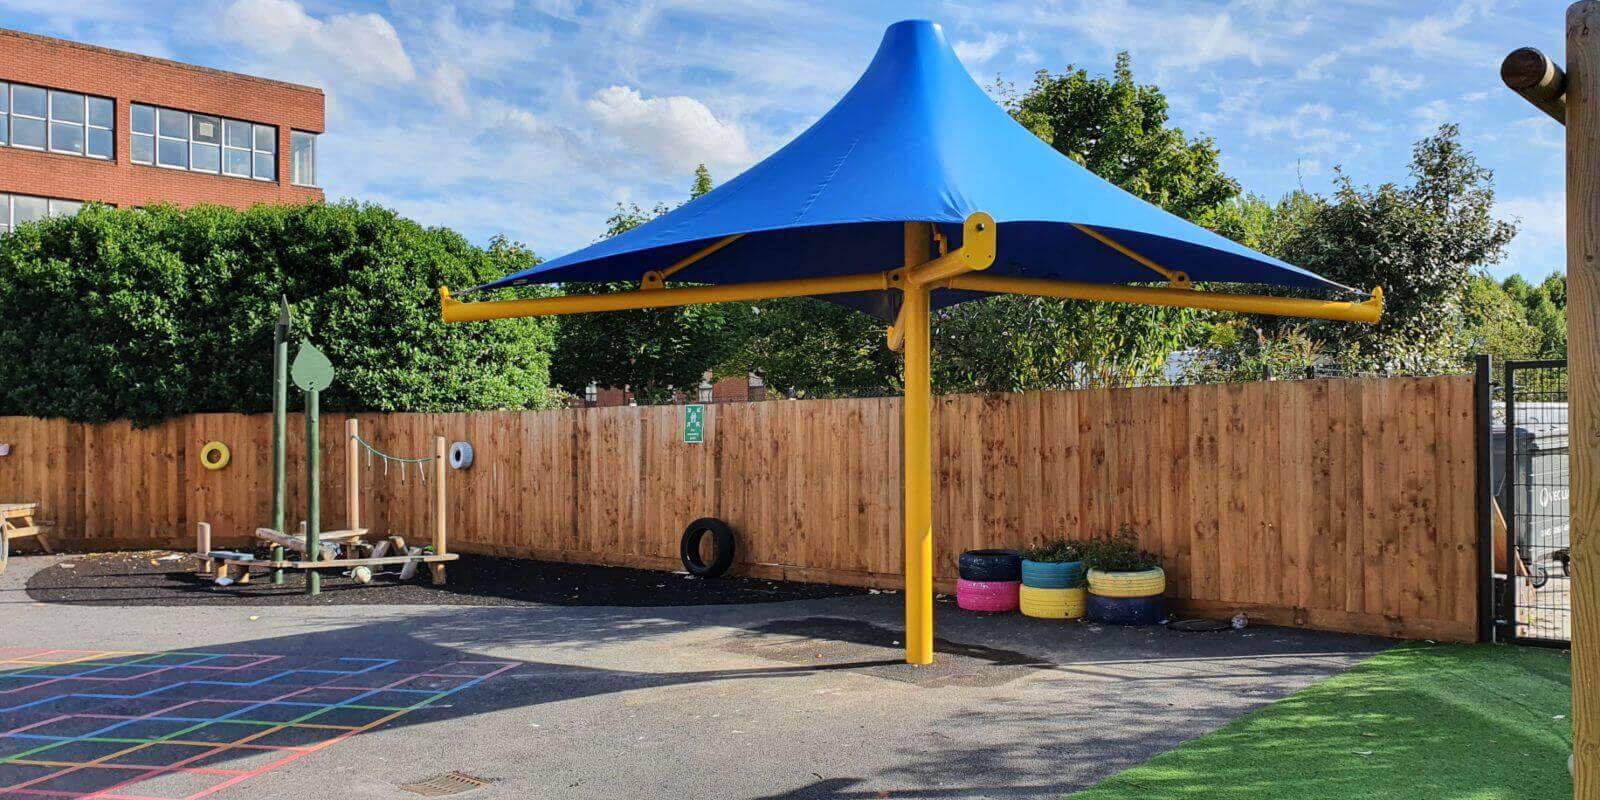 Playground umbrella shade installed at Charles Darwin Primary School